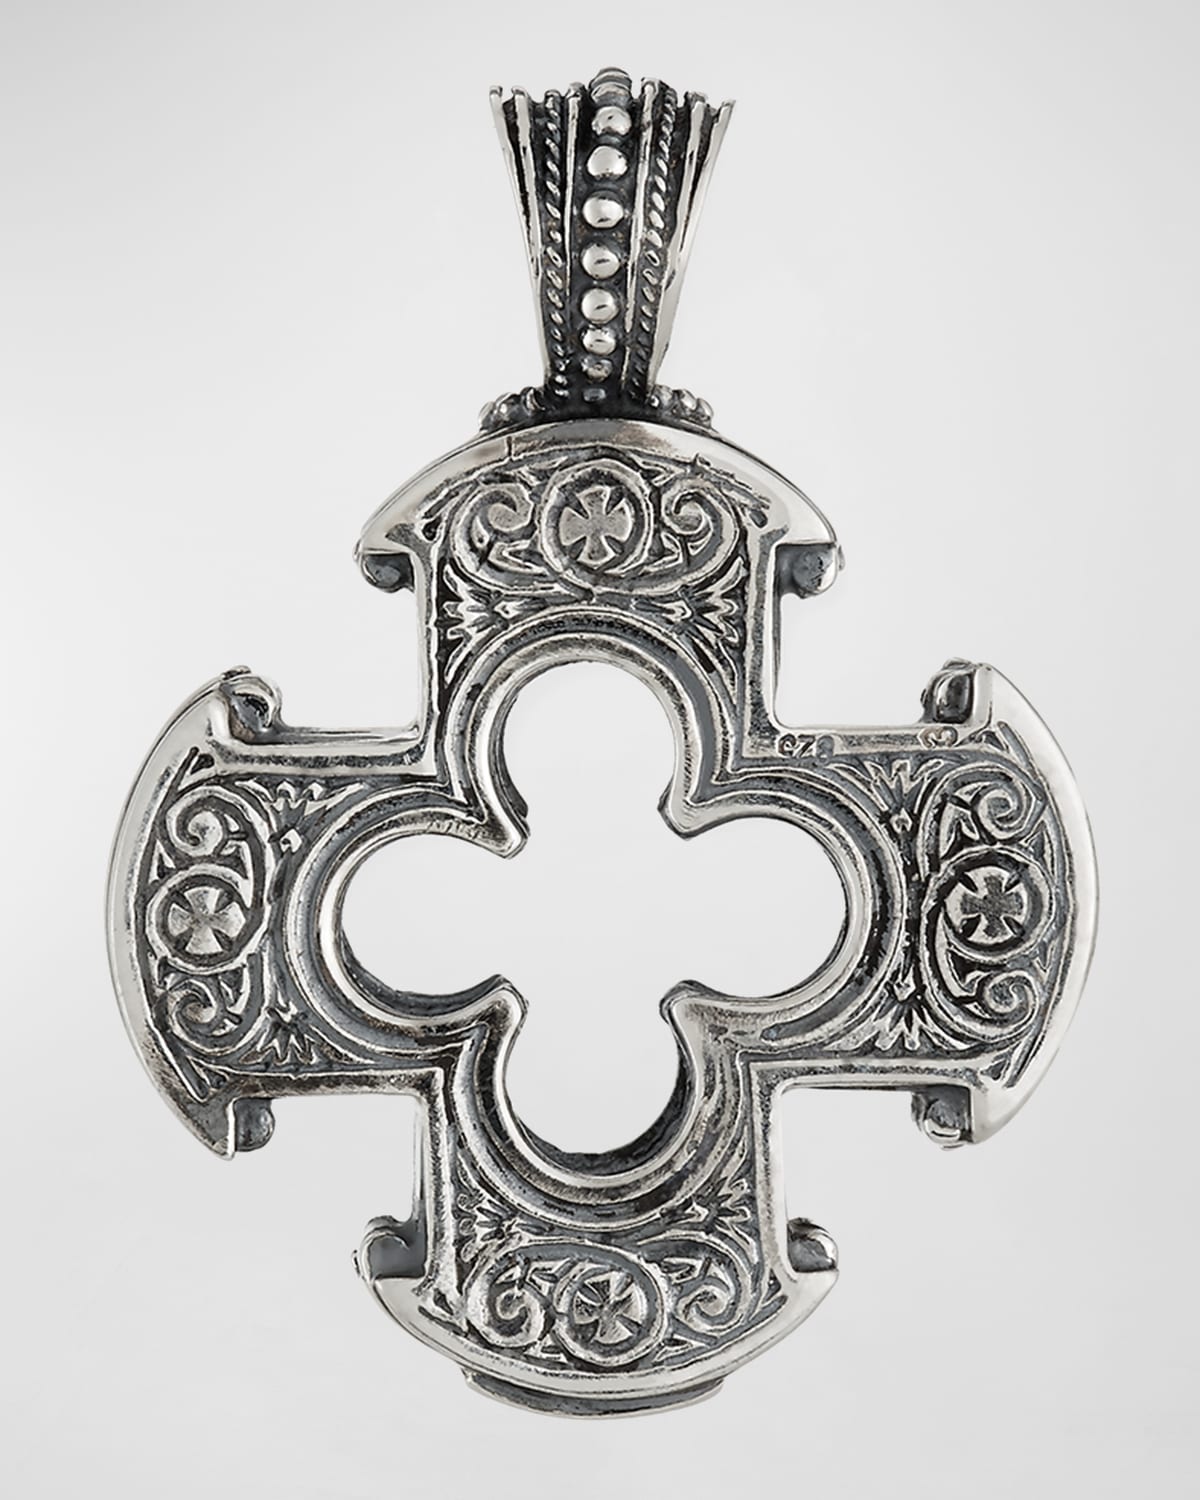 Shop Konstantino Sterling Silver Classics Cross Pendant